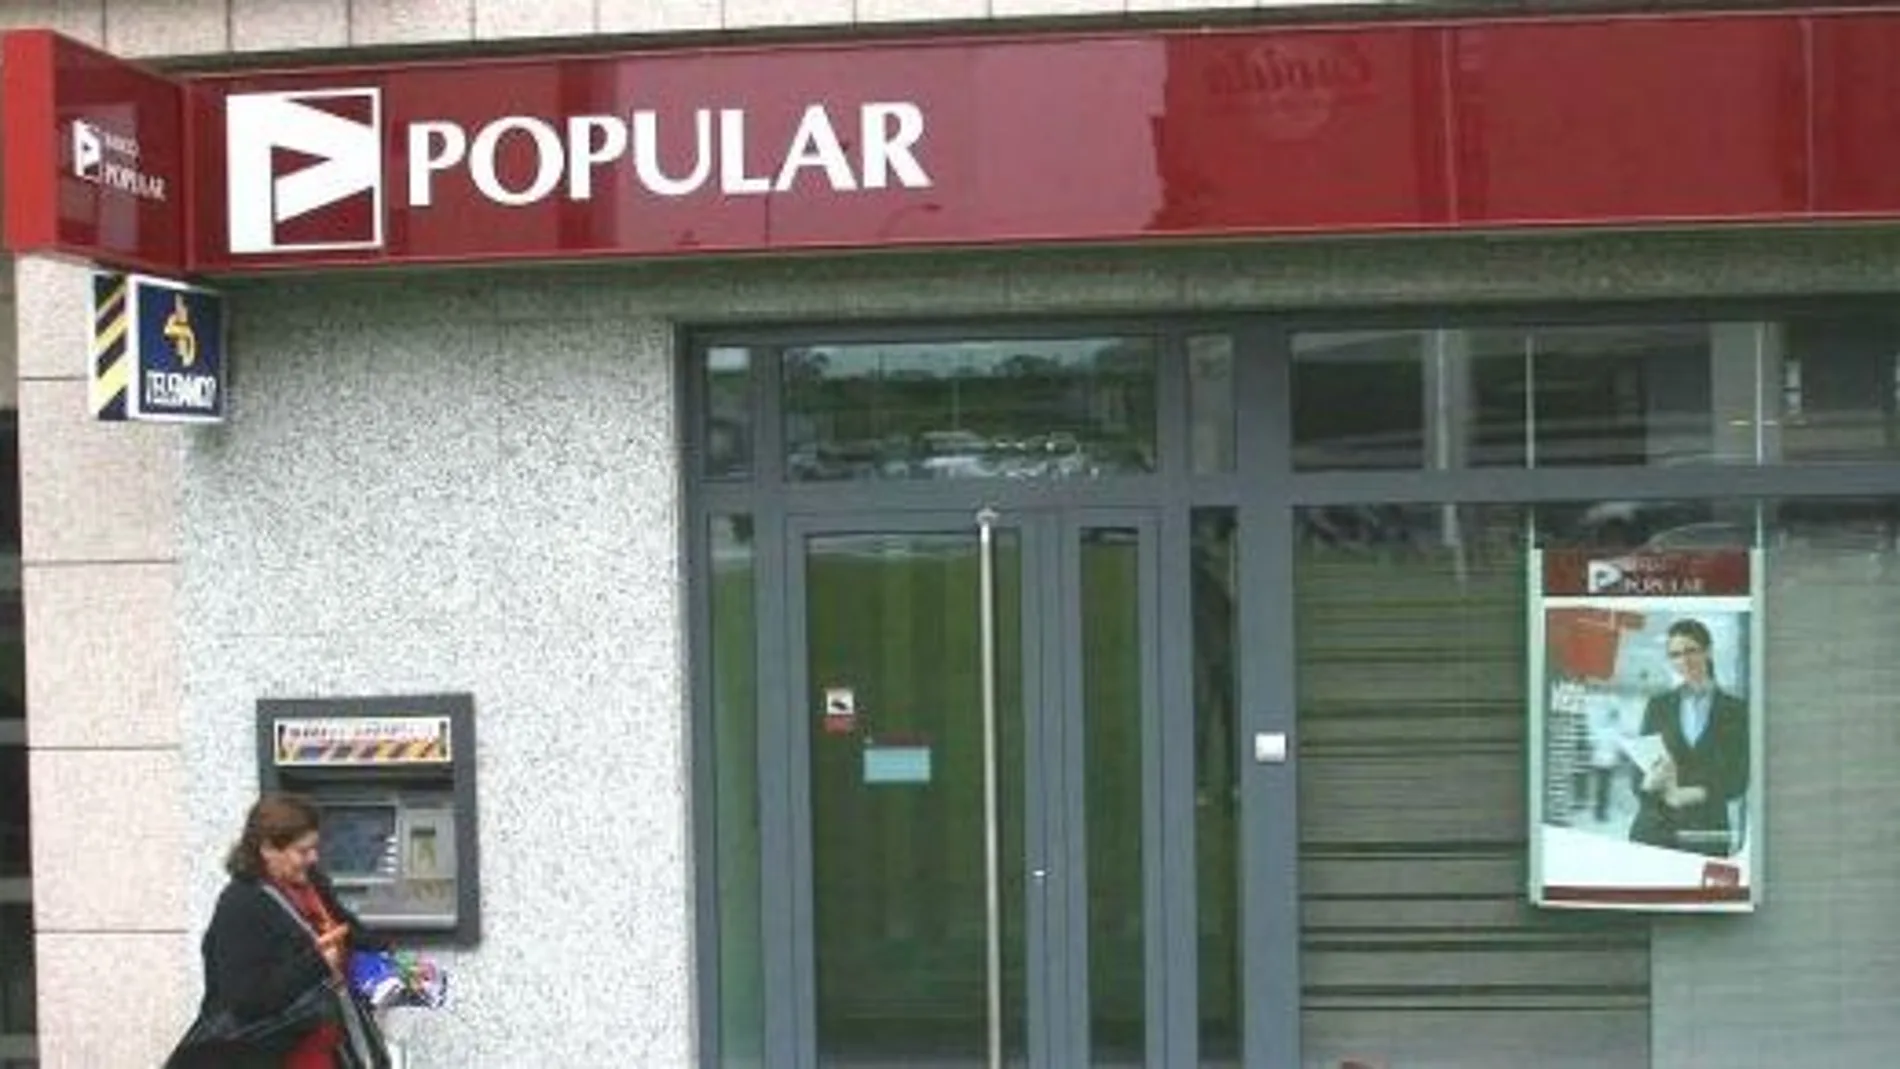 Oficina del Banco Popular